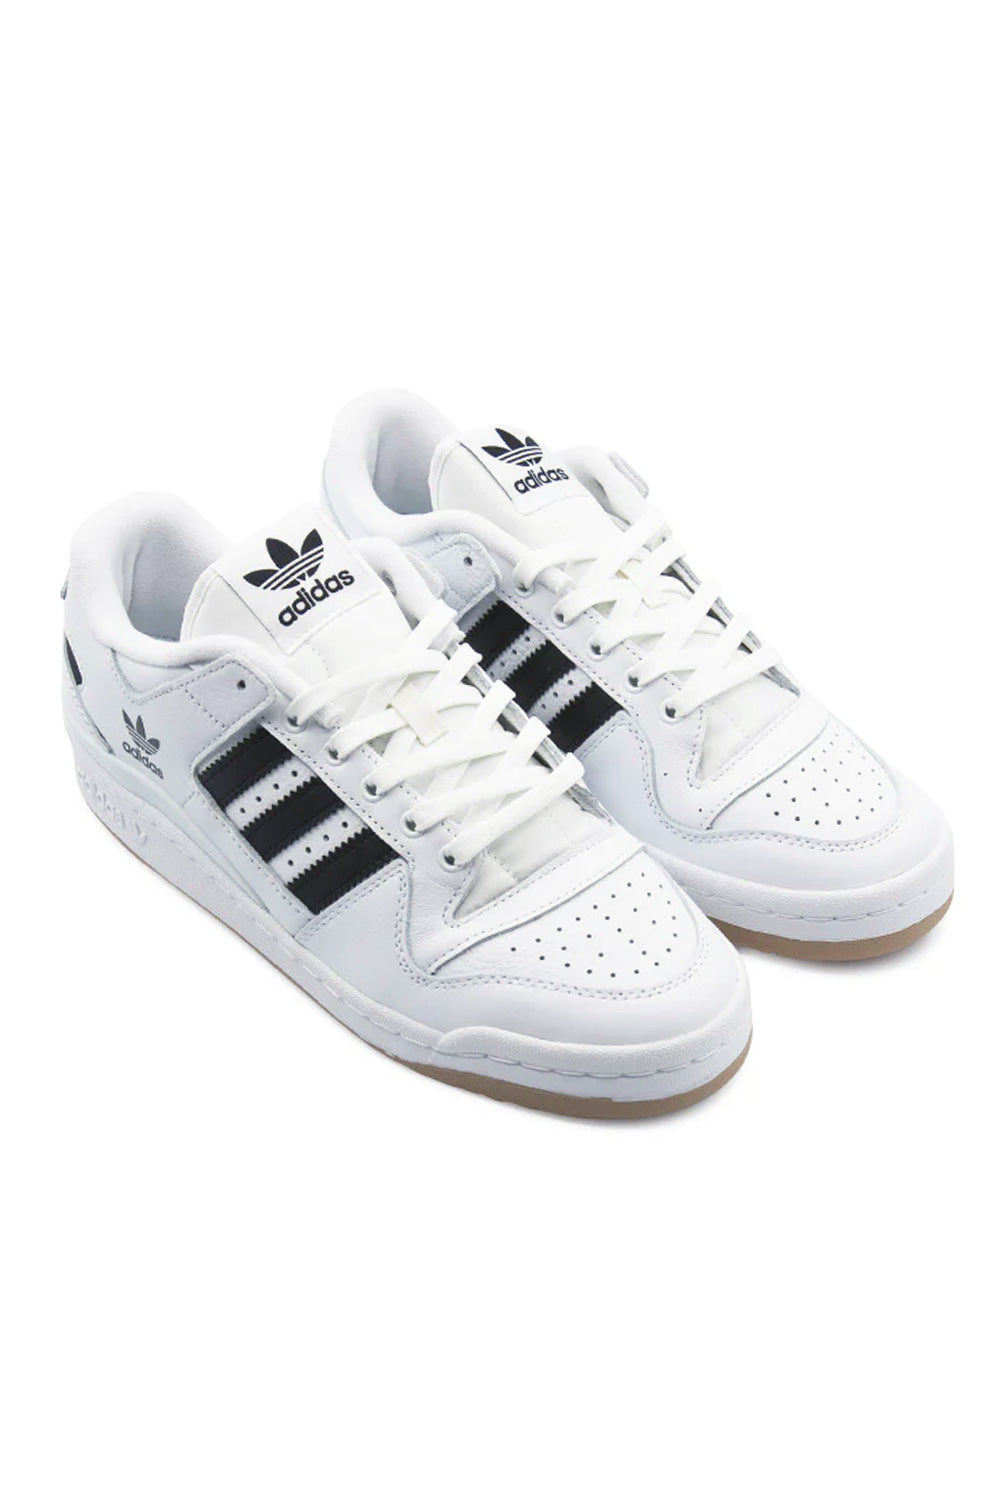 Adidas Forum 84 Low ADV Shoe Cloud White / Core Black / Cloud White - BONKERS